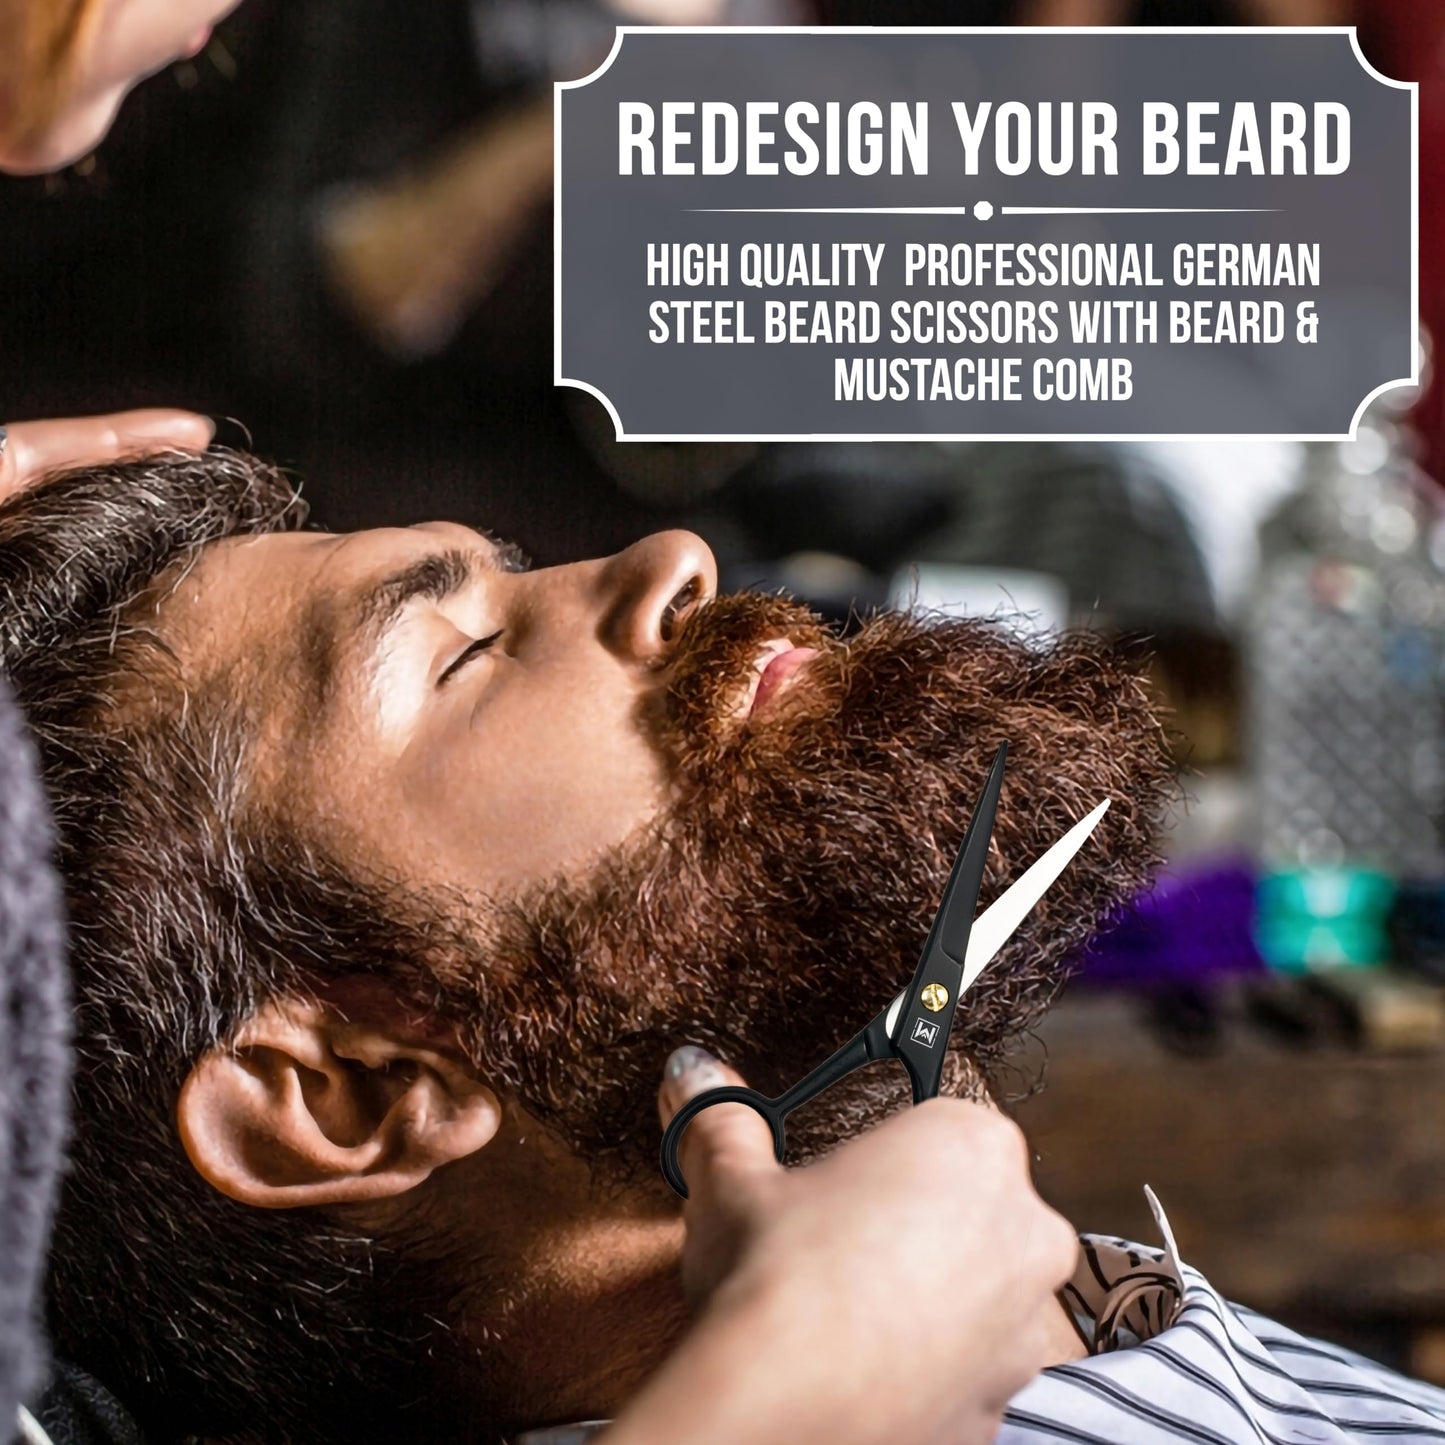 WAJEES Beard Scissors for Men A Complete Set of Grooming Scissors Men, 1 Mustache Comb, & 1 Beard Grooming Comb in a Carrying Pouch Perfect Mustache Scissors, Men’s Facial Hair Scissors